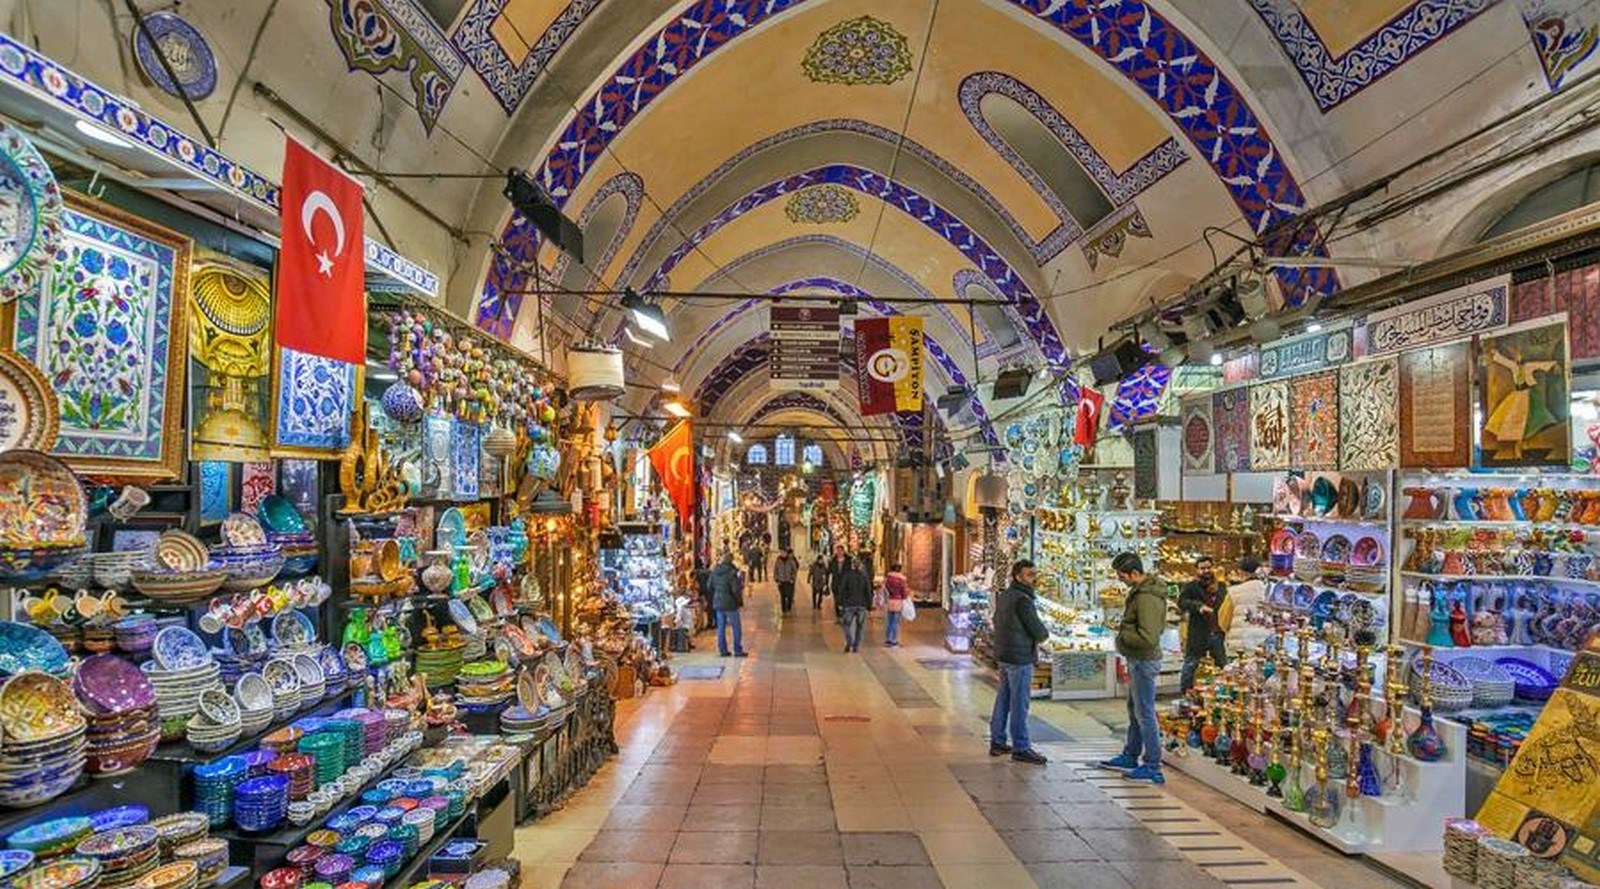 A journey through Istanbul's Grand Bazaar